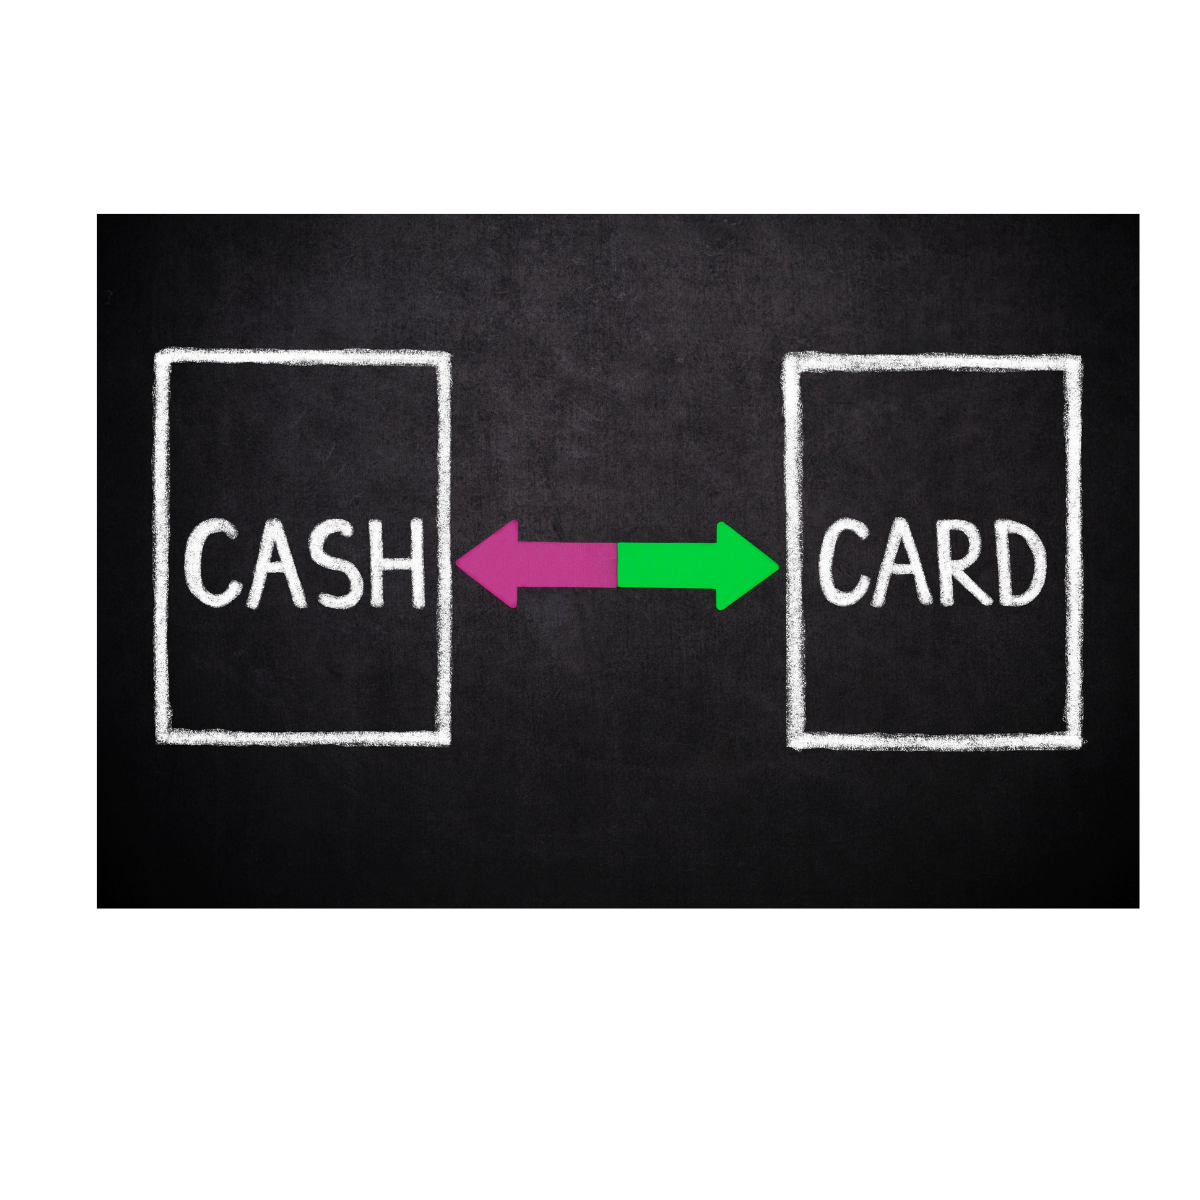 cash card